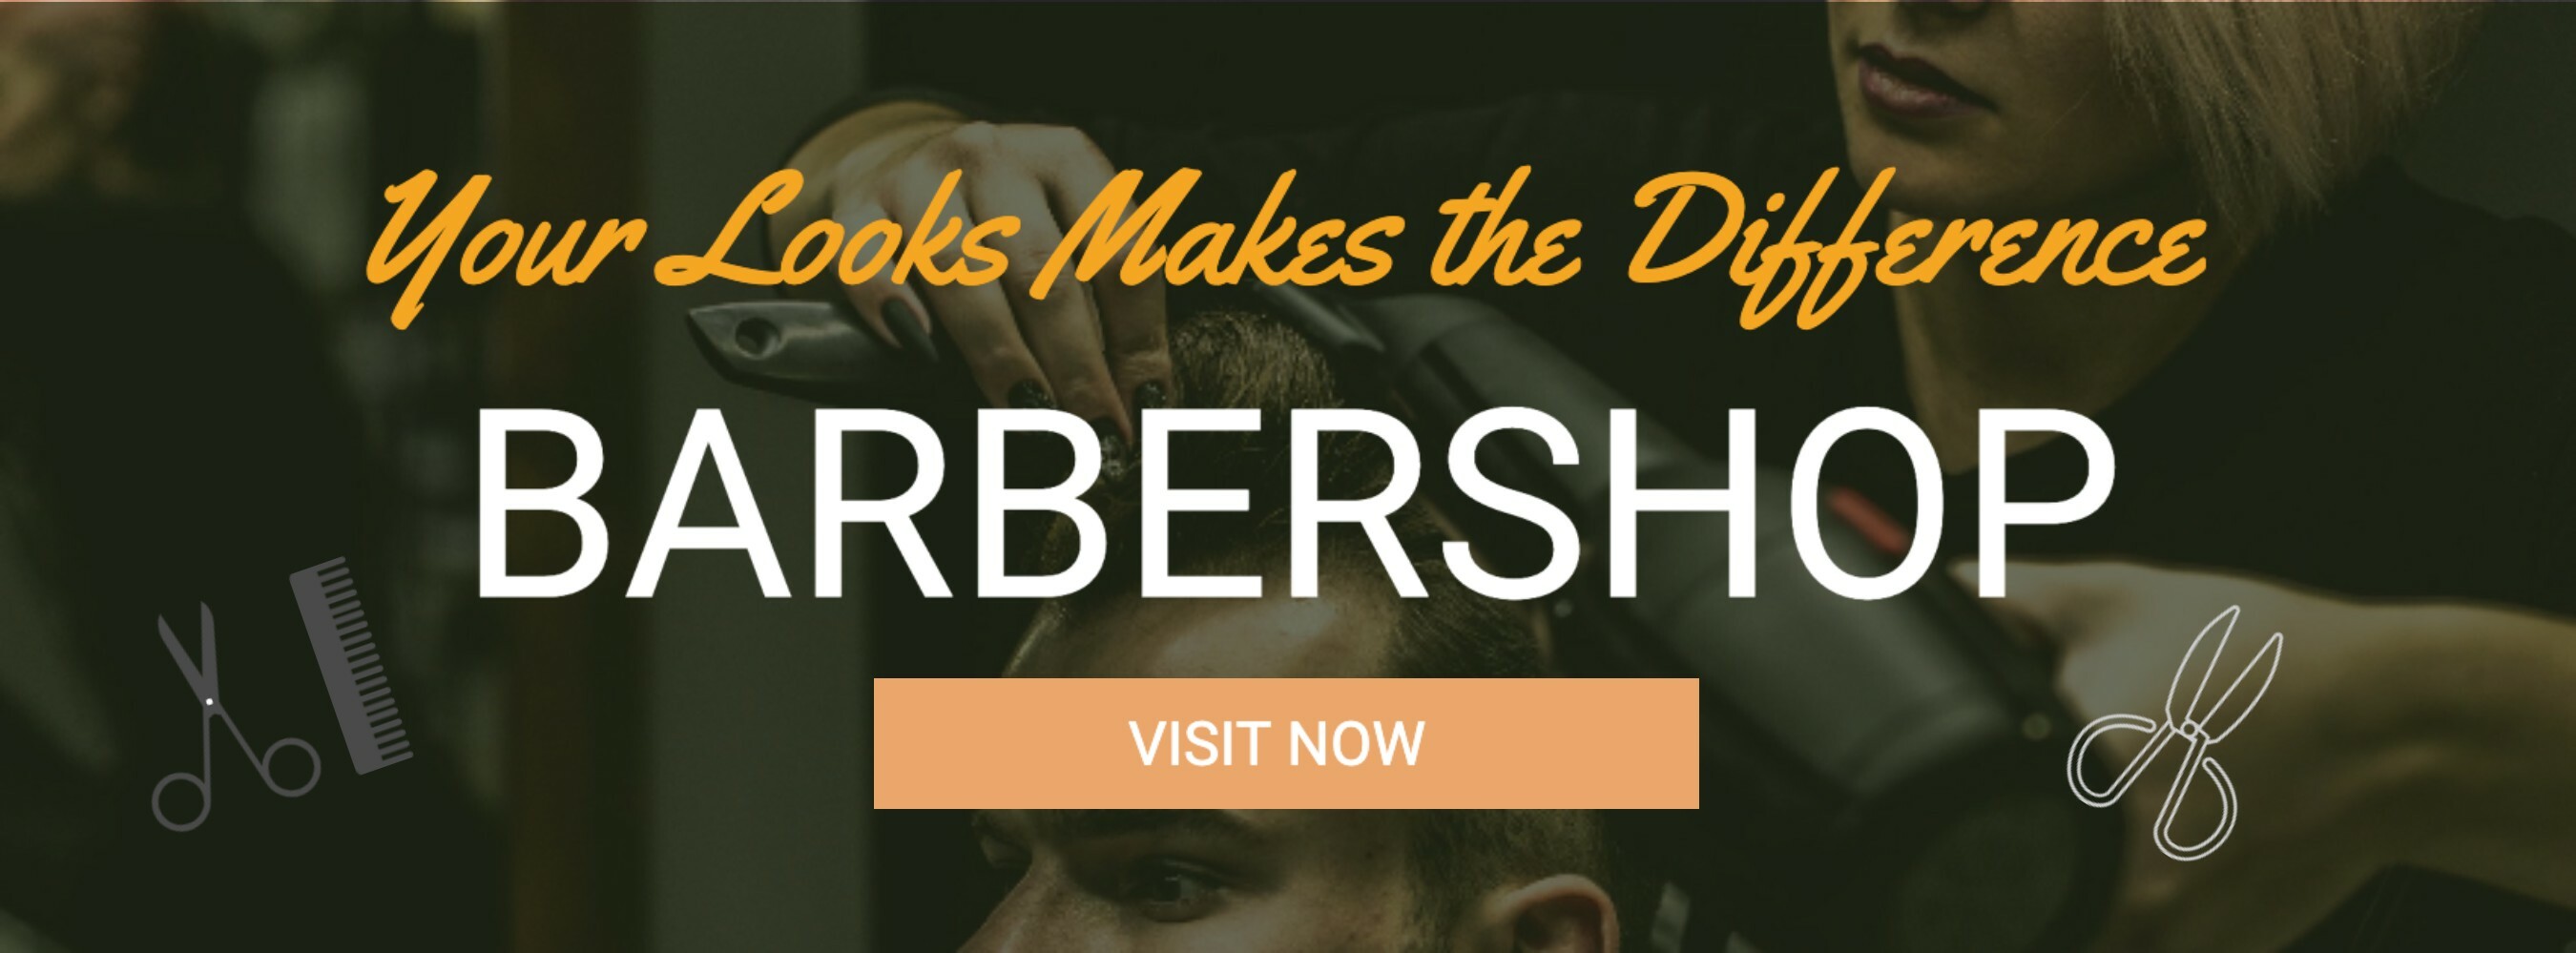 Barbershop promo template